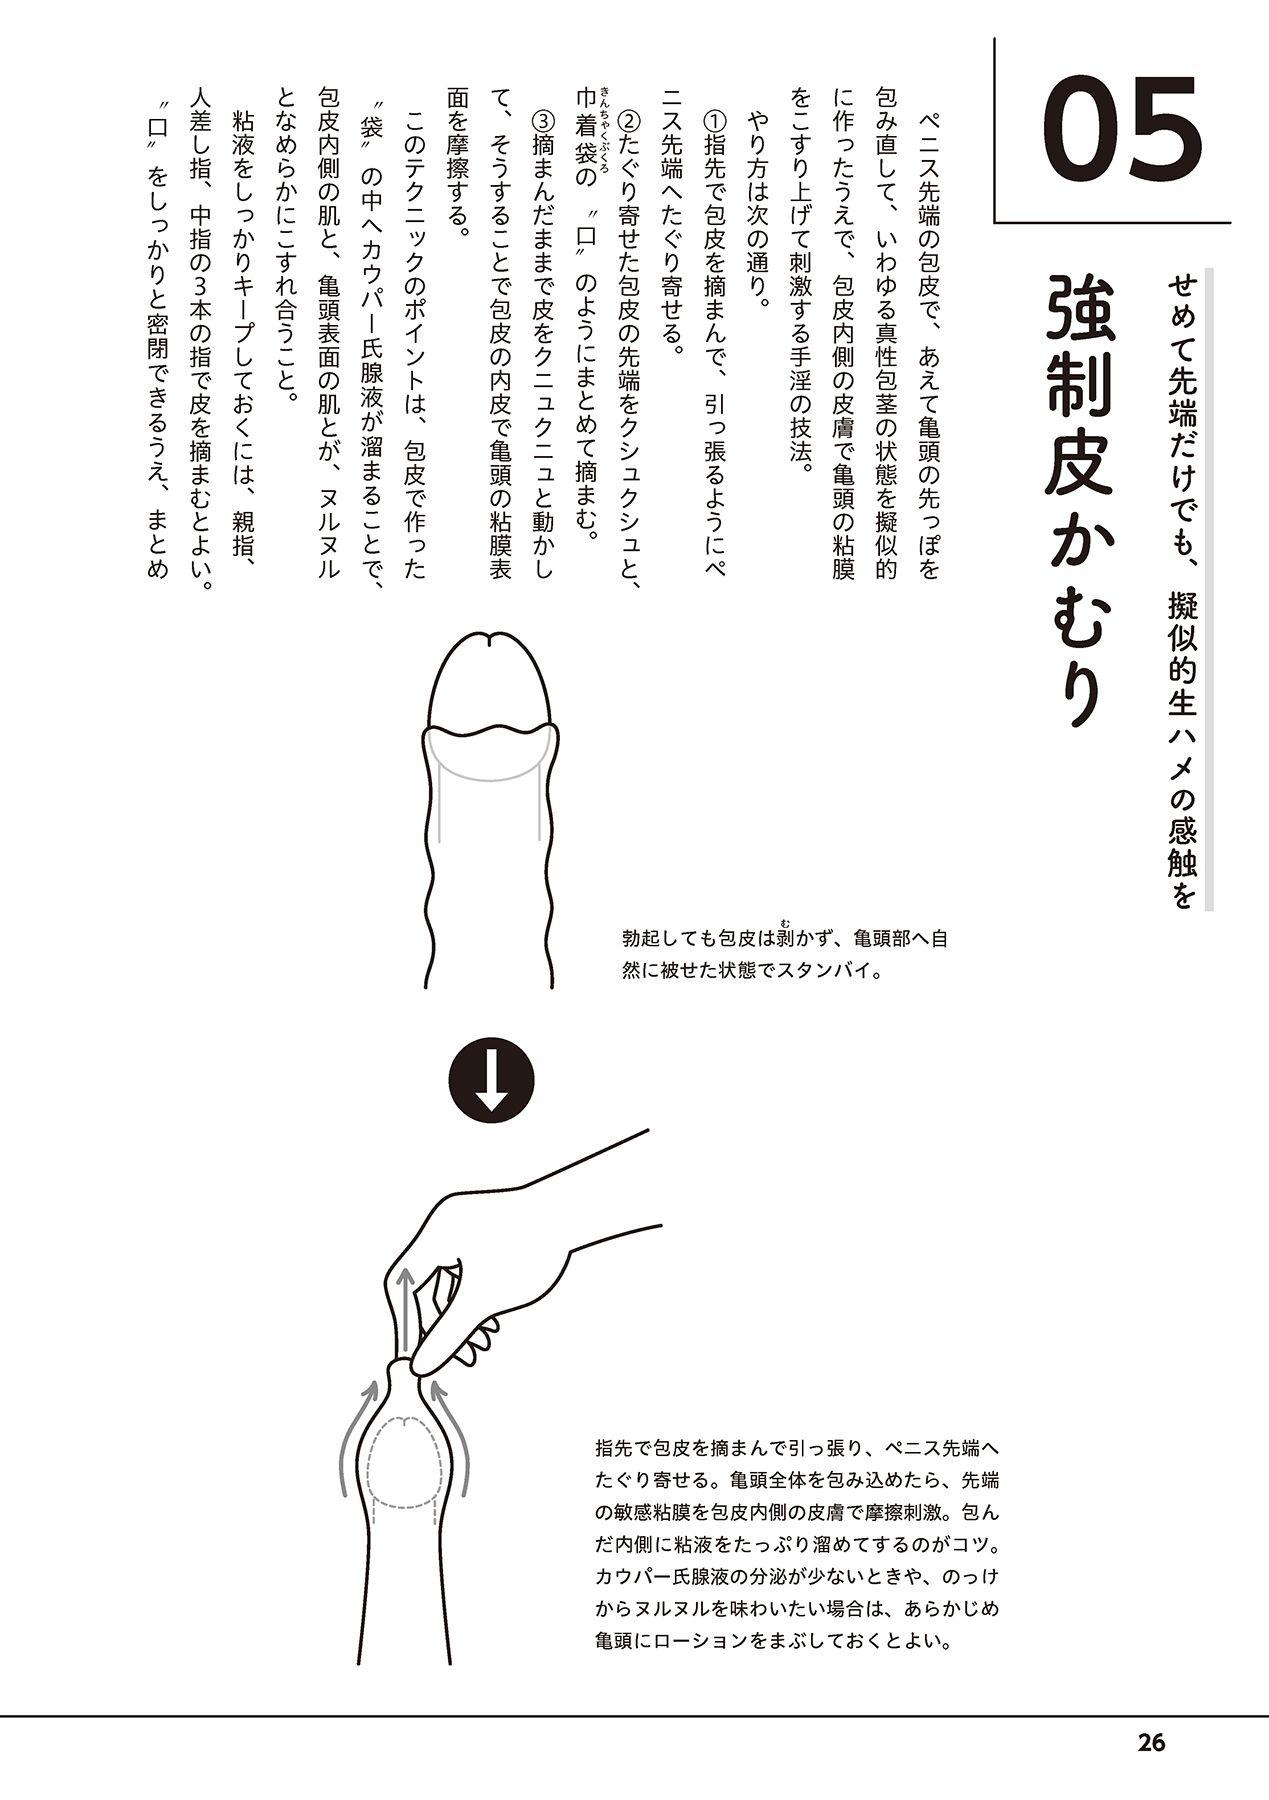 Otoko no Jii Onanie Kanzen Manual Illustration Han...... Onanie Play 27